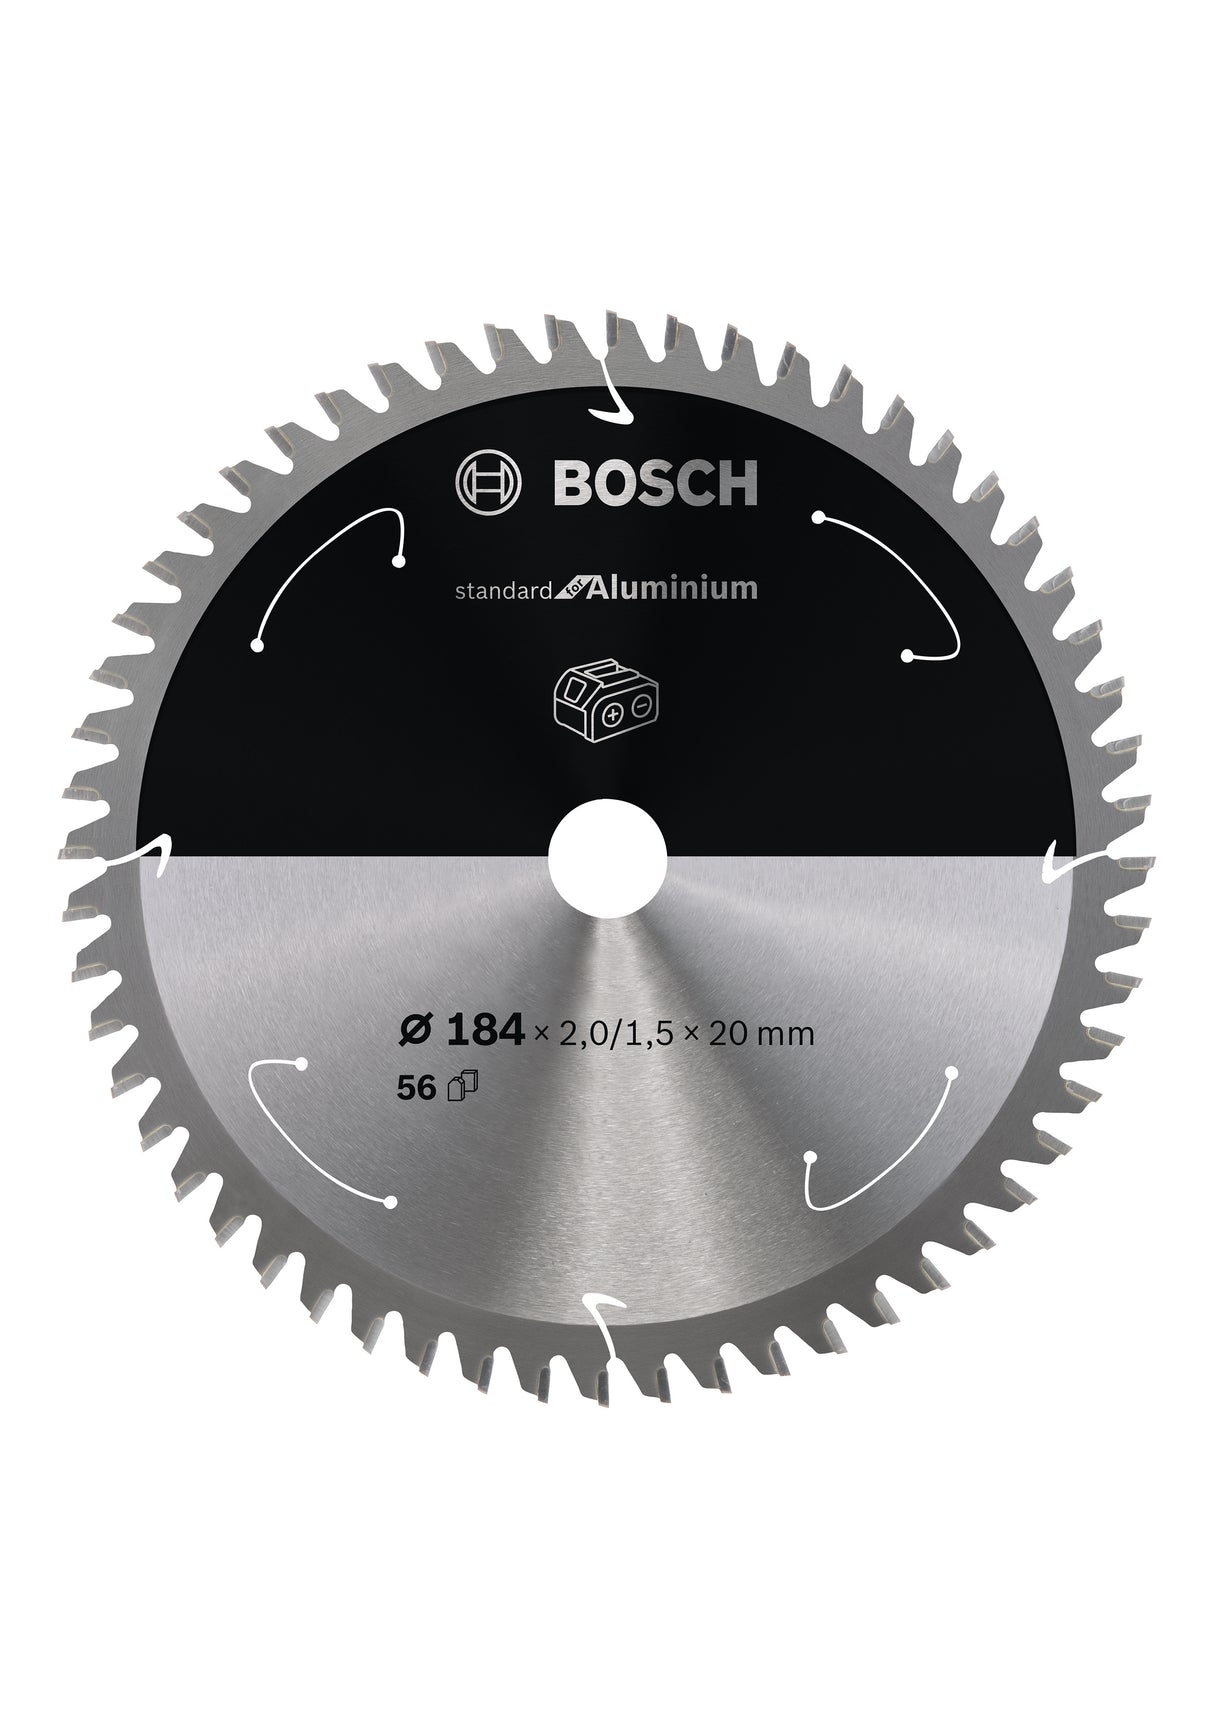 Bosch Professional Aluminium Circular Saw Blade for Cordless Saws - 184x2/1.5x20 T56 - Standard